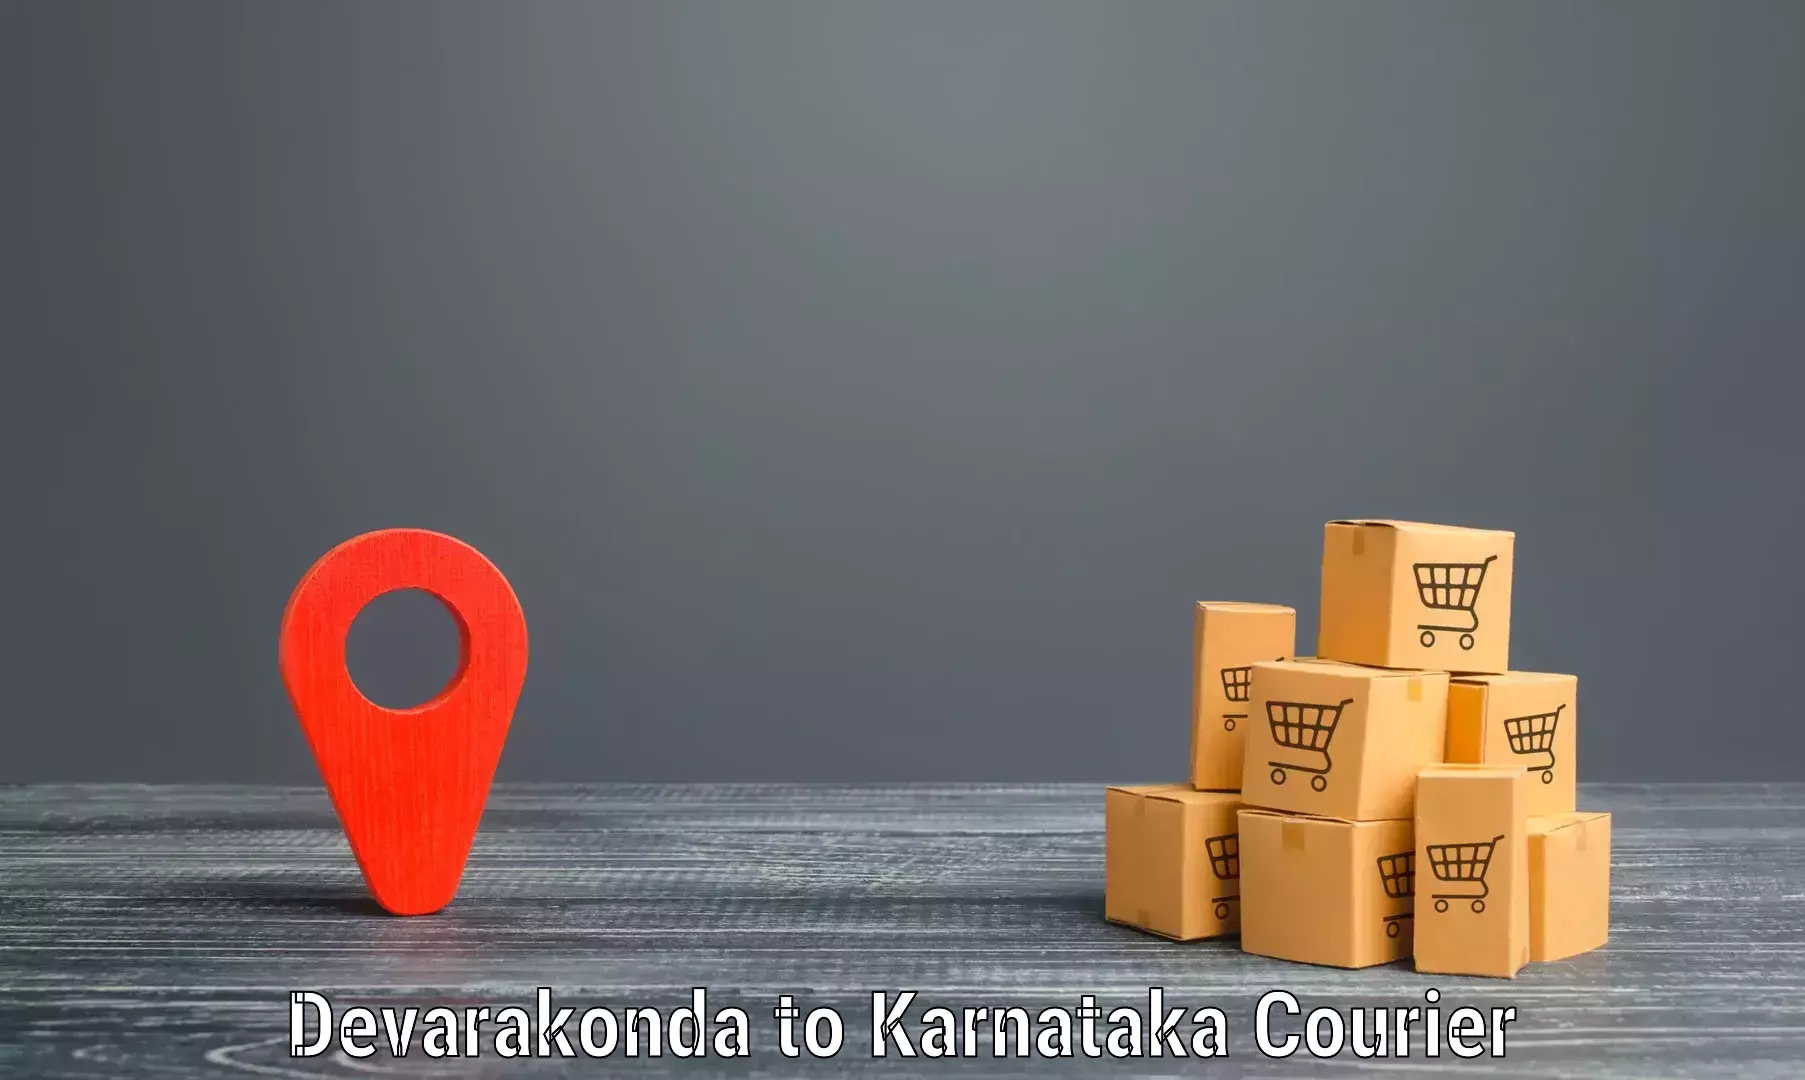 Sustainable delivery practices Devarakonda to Karnataka